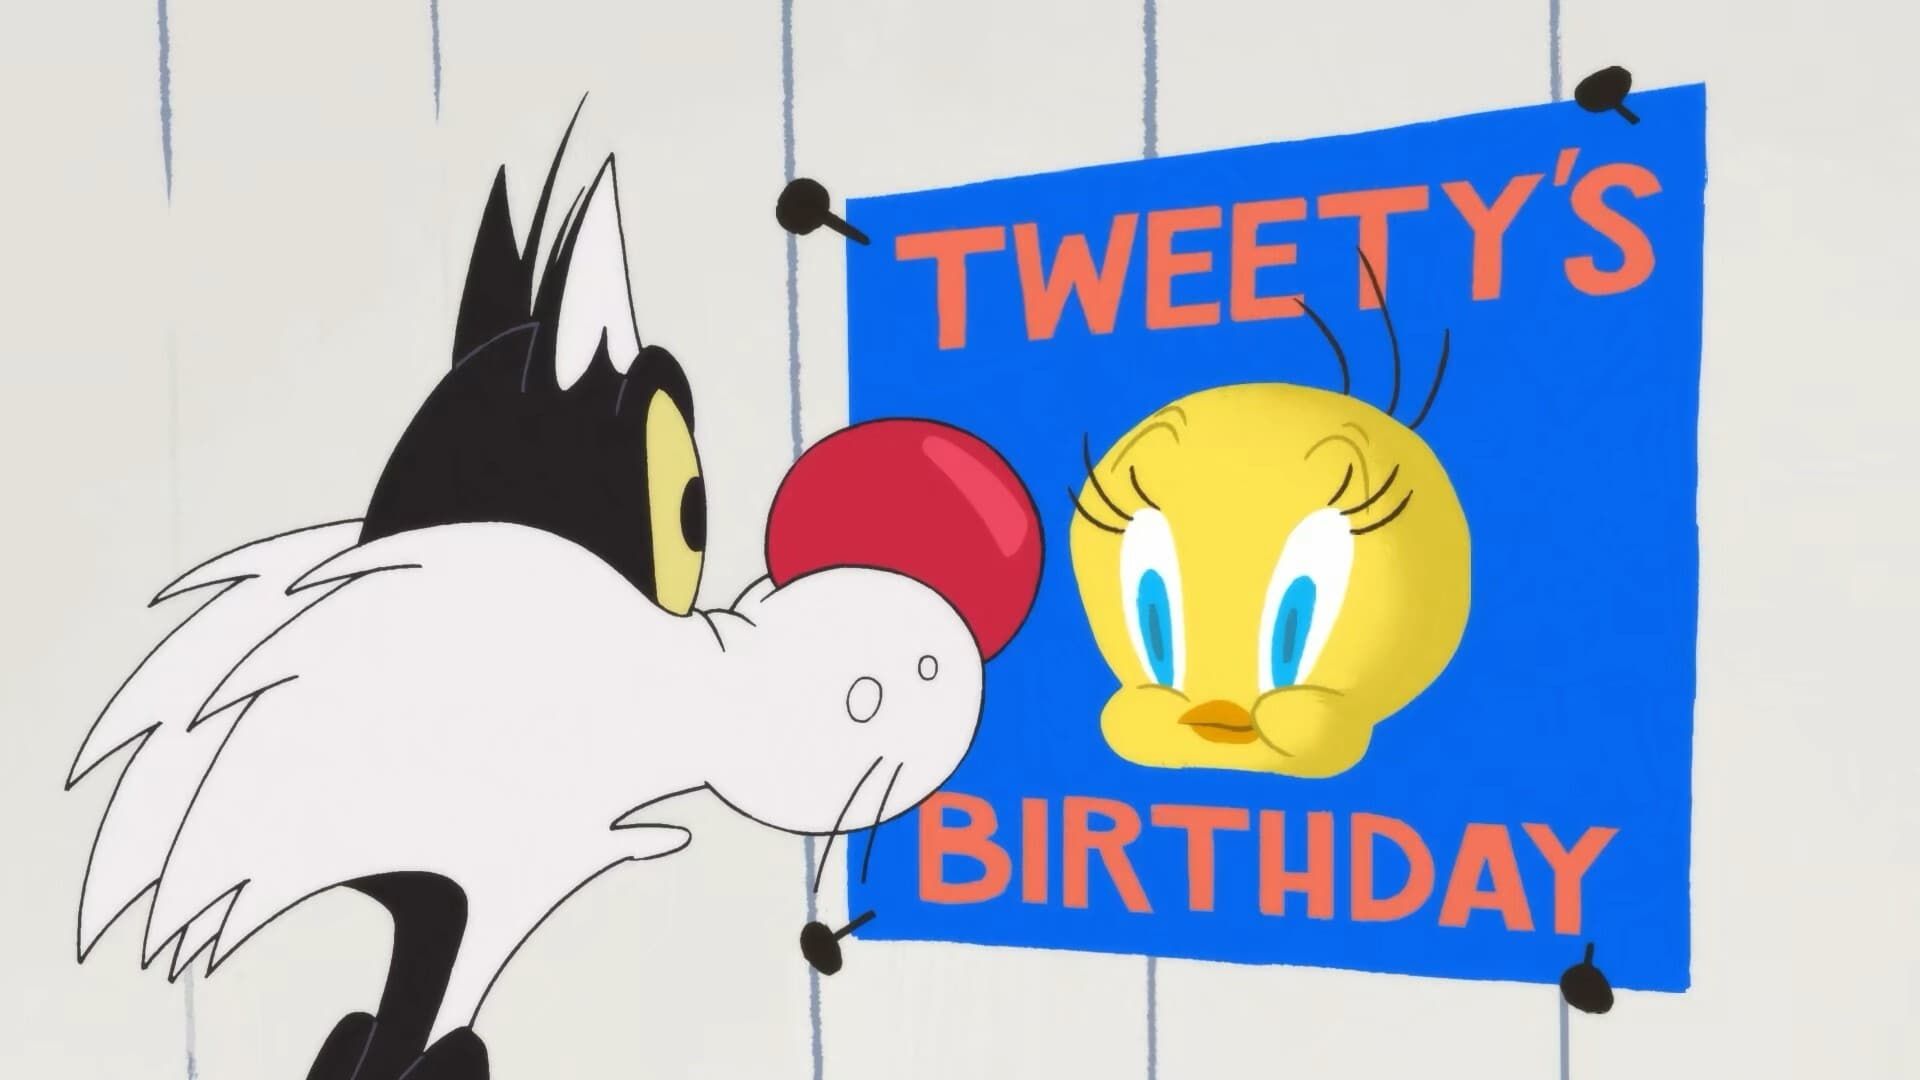 Looney Tunes Cartoons background